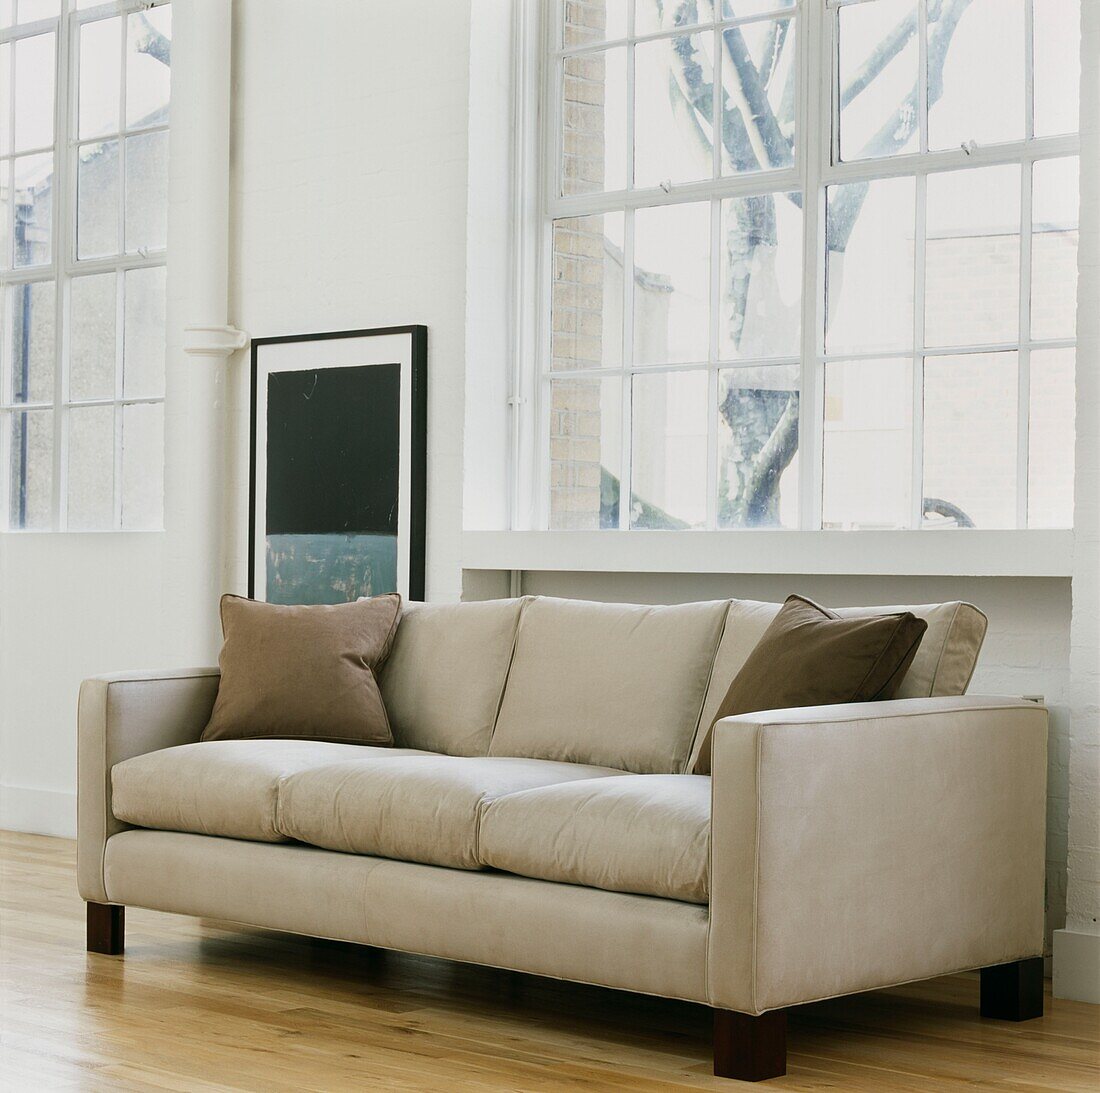 Cremefarbenes Sofa mit modernem Kunstwerk an einem Fenster ohne Vorhang